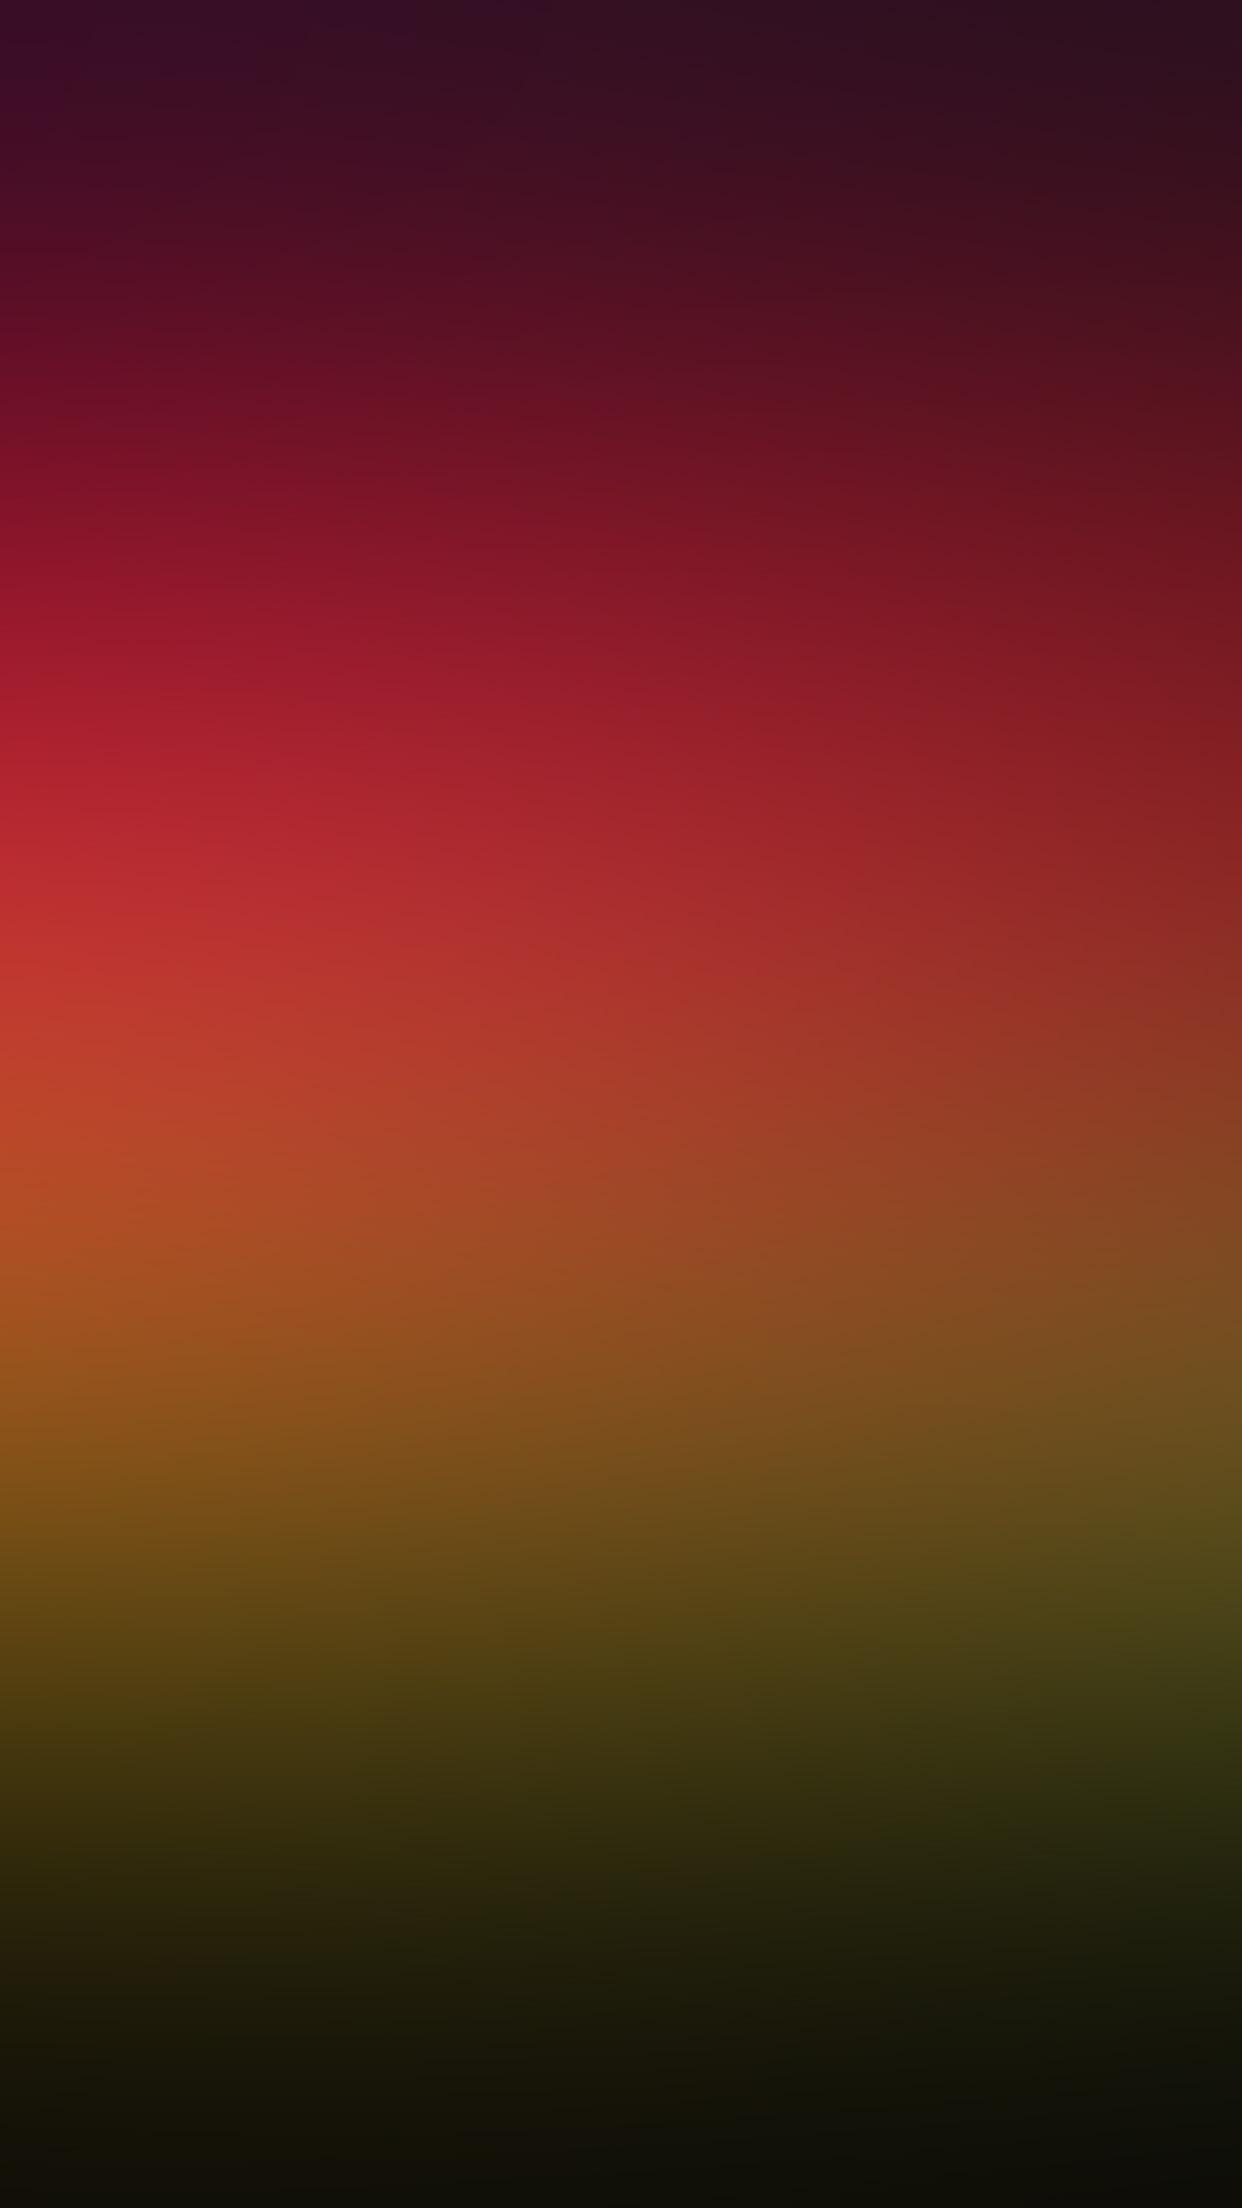 iPhone X wallpaper. blush red orange fire love gradation blur